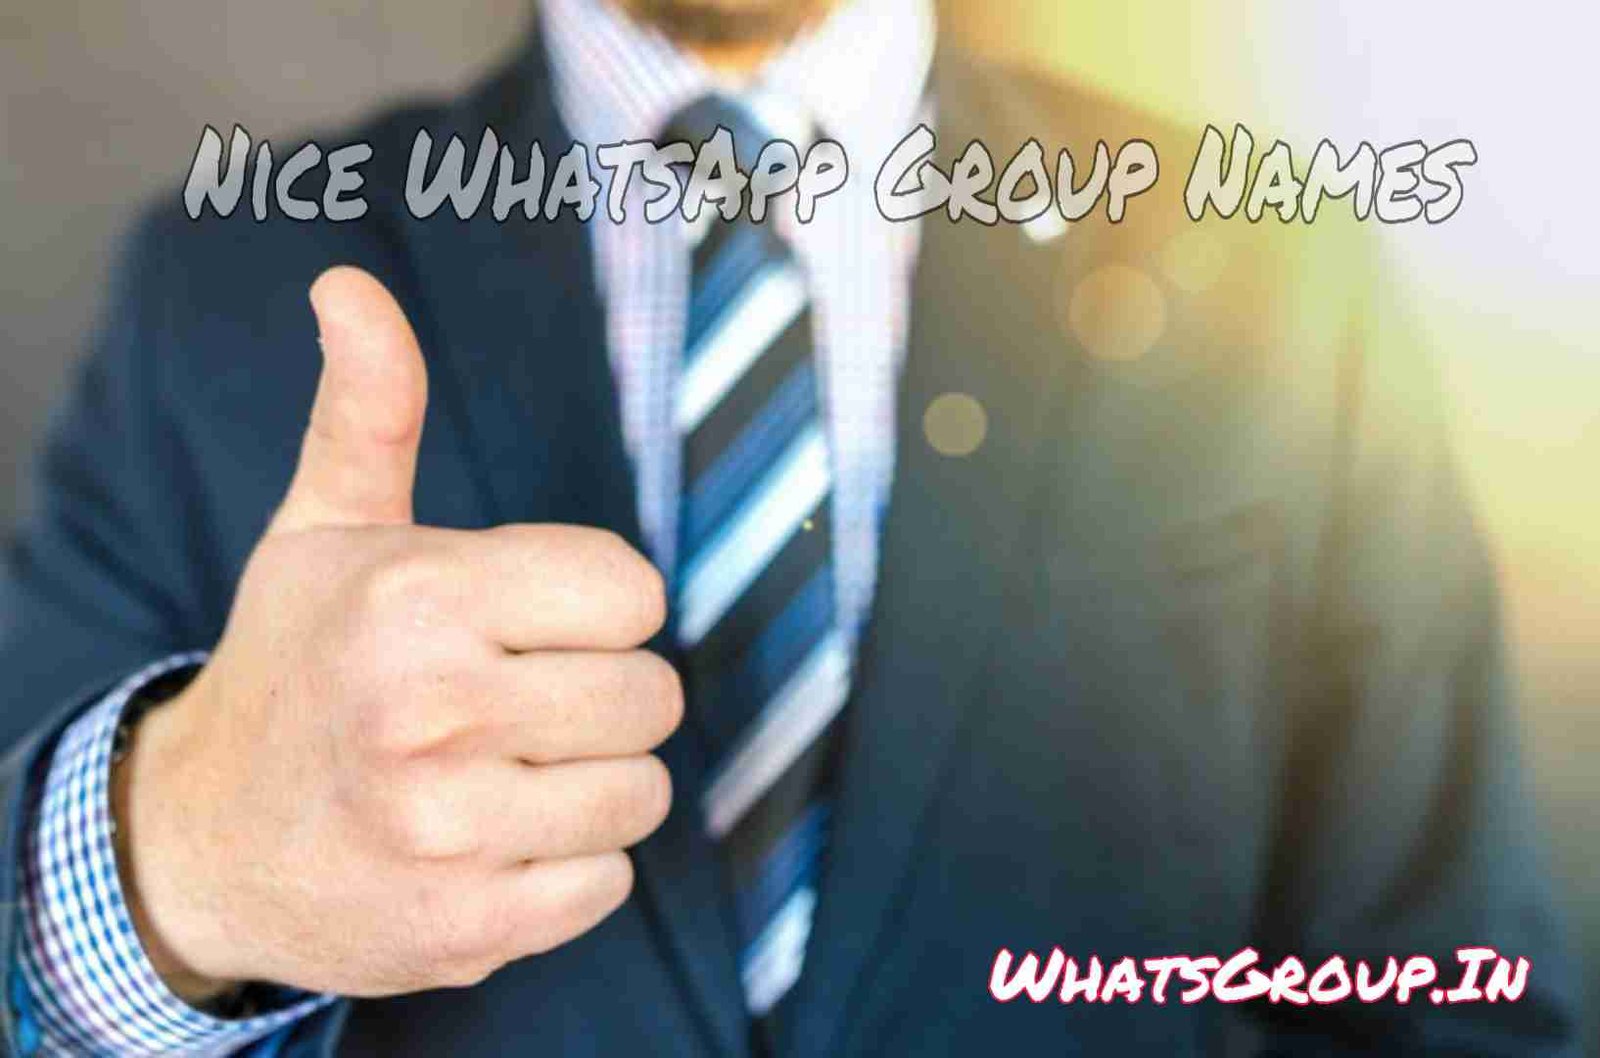 Nice WhatsApp Group Names